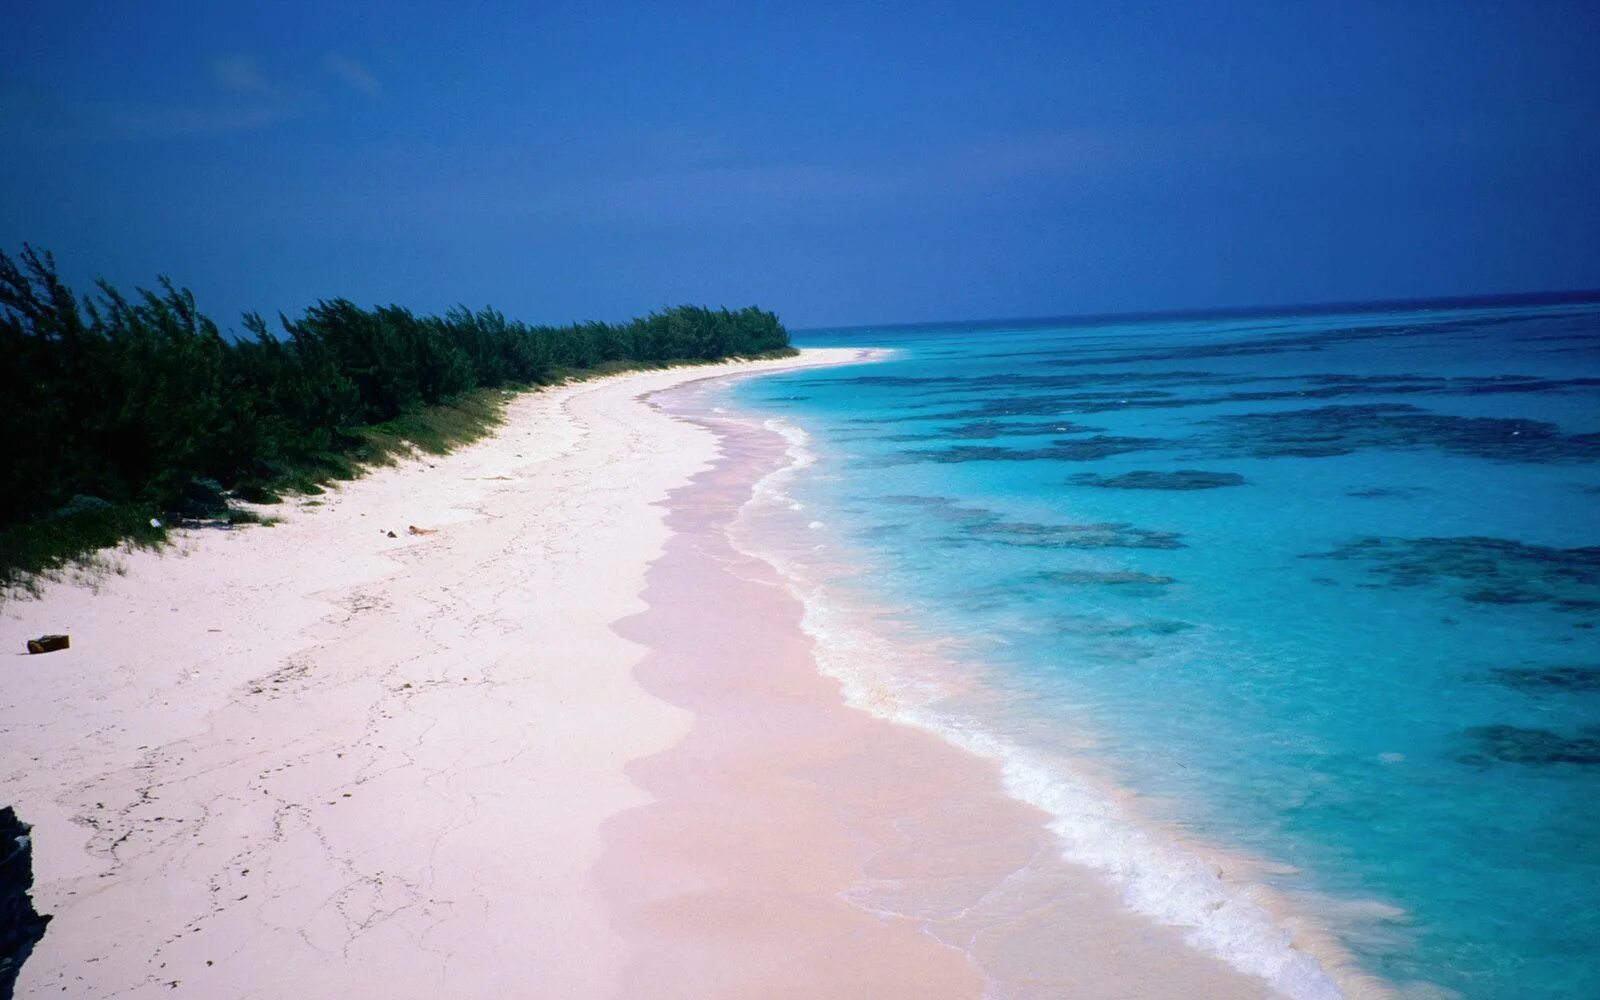 Harbor island. Пляж Пинк-Сэнд-Бич, Харбор, Багамские острова. Пляж Пинк Сэндс Бич Багамские острова. Розовый пляж Пинк Сэндс Бич, Багамские острова. Харбор Багамы розовый пляж.